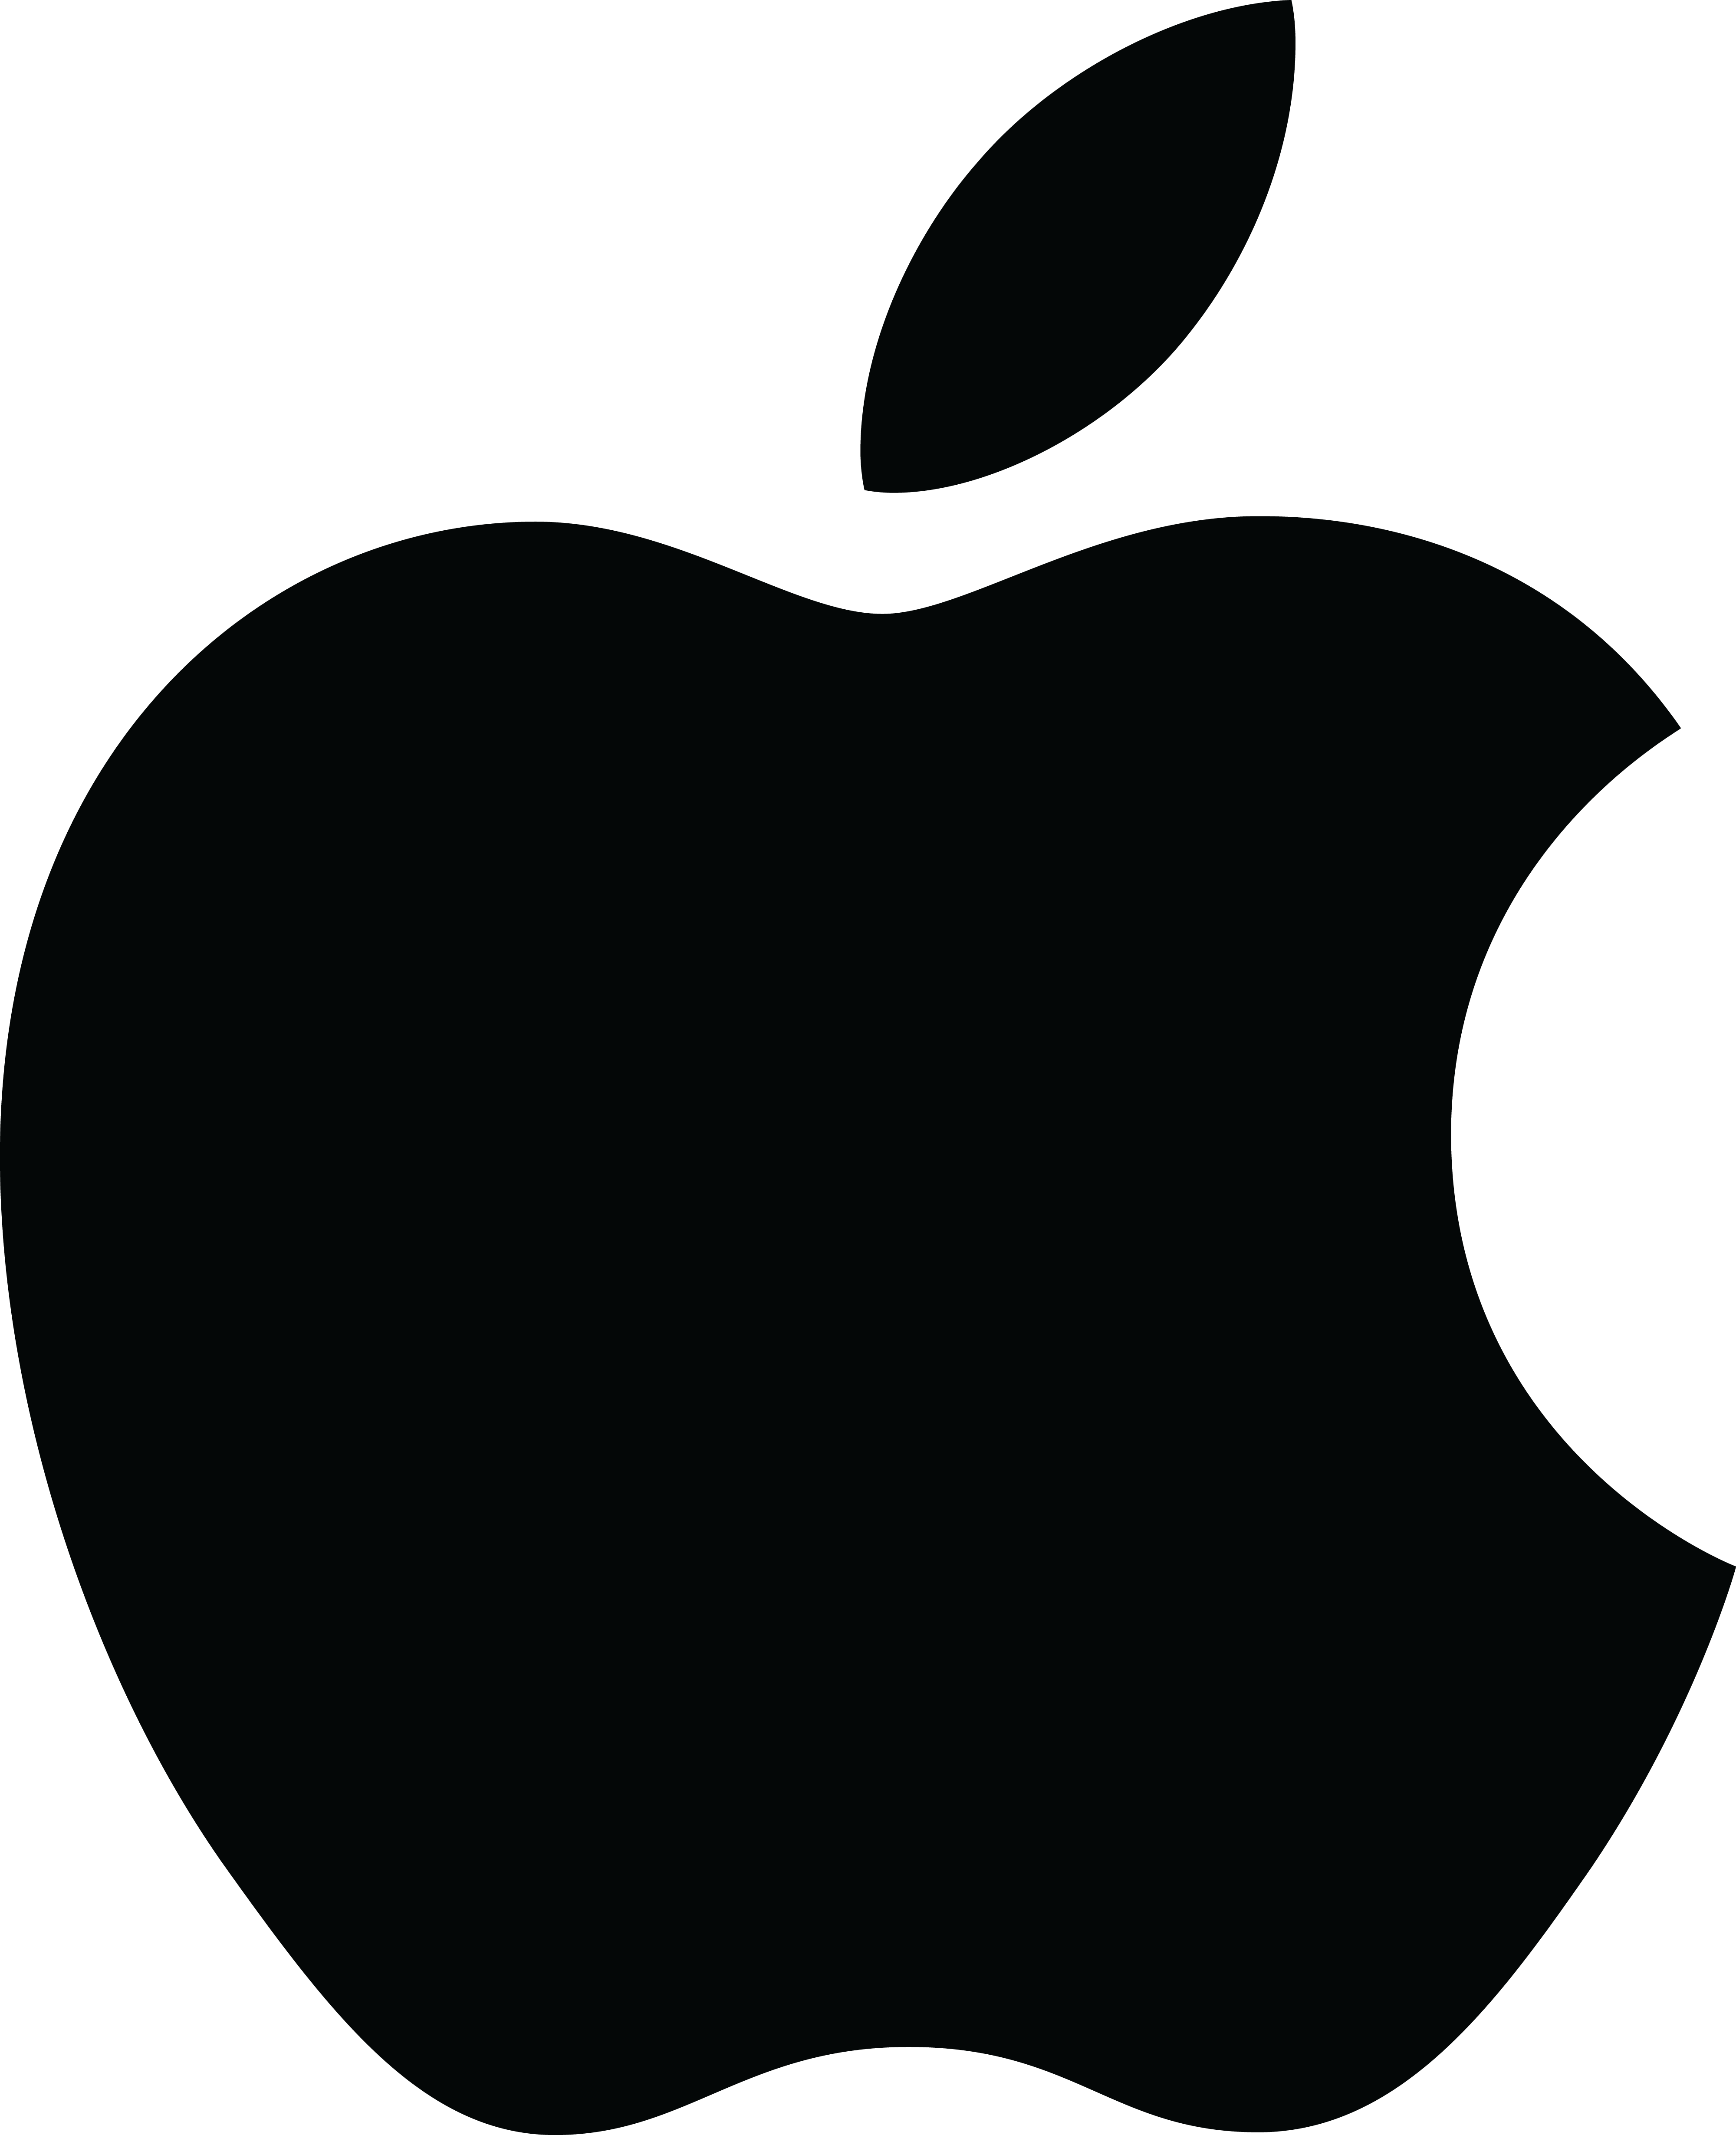 Free Clipart: JPG, PNG, EPS, AI, SVG, CDR - Retro Apple Logo